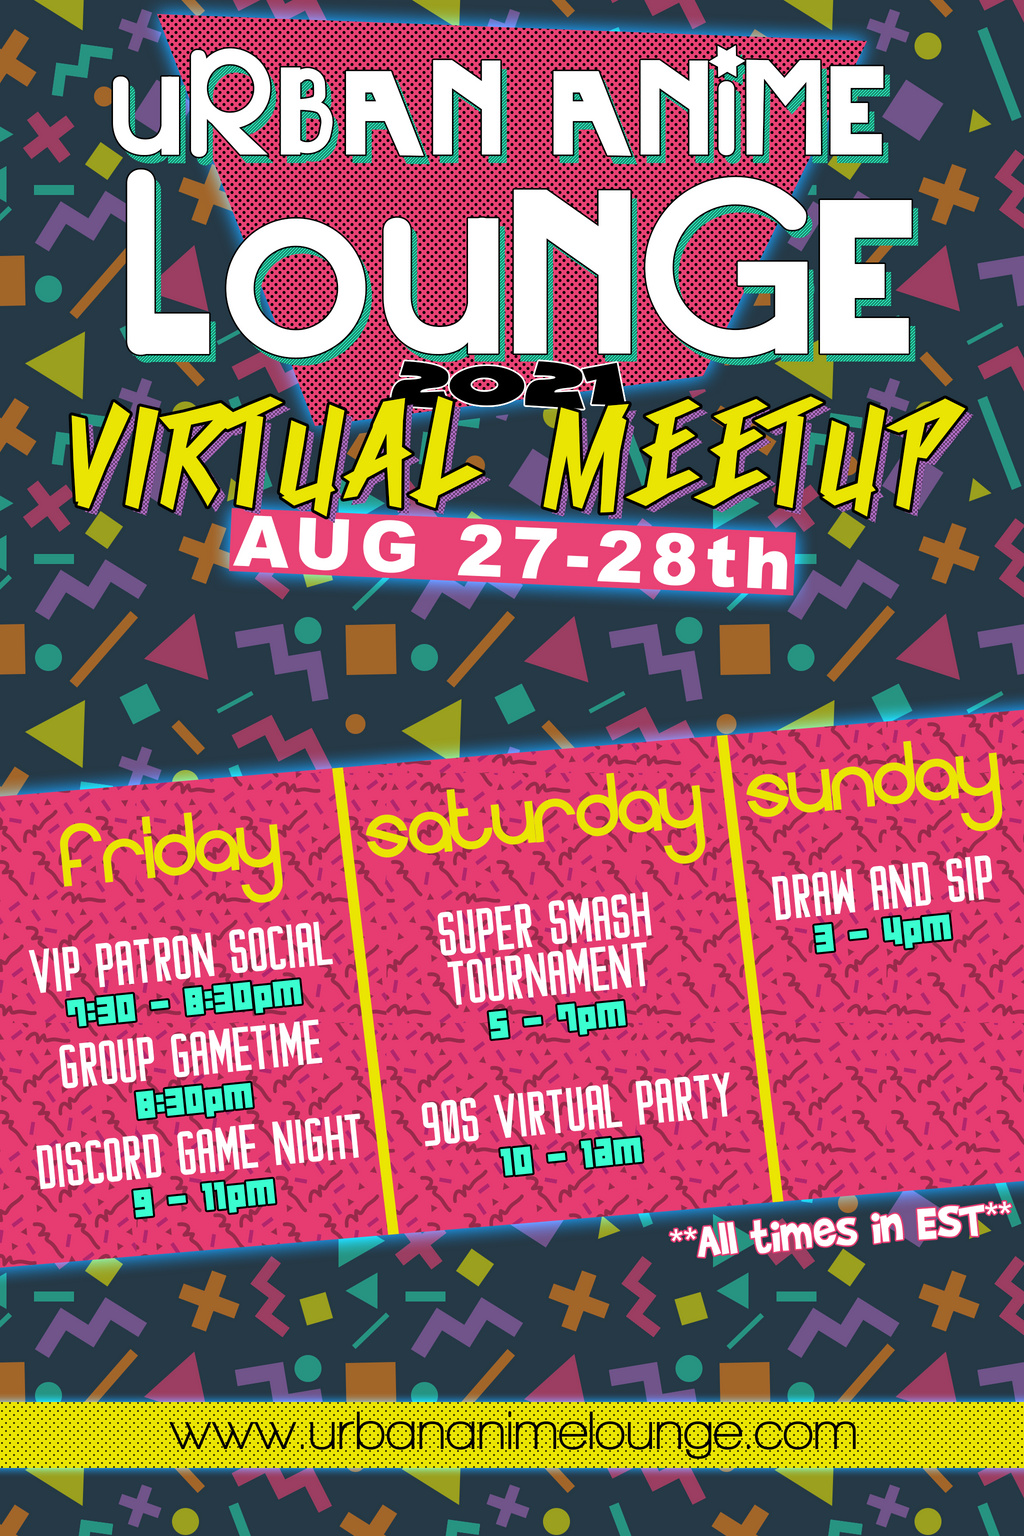 Urban Anime Lounge 90s Virtual Meetup for 2021!